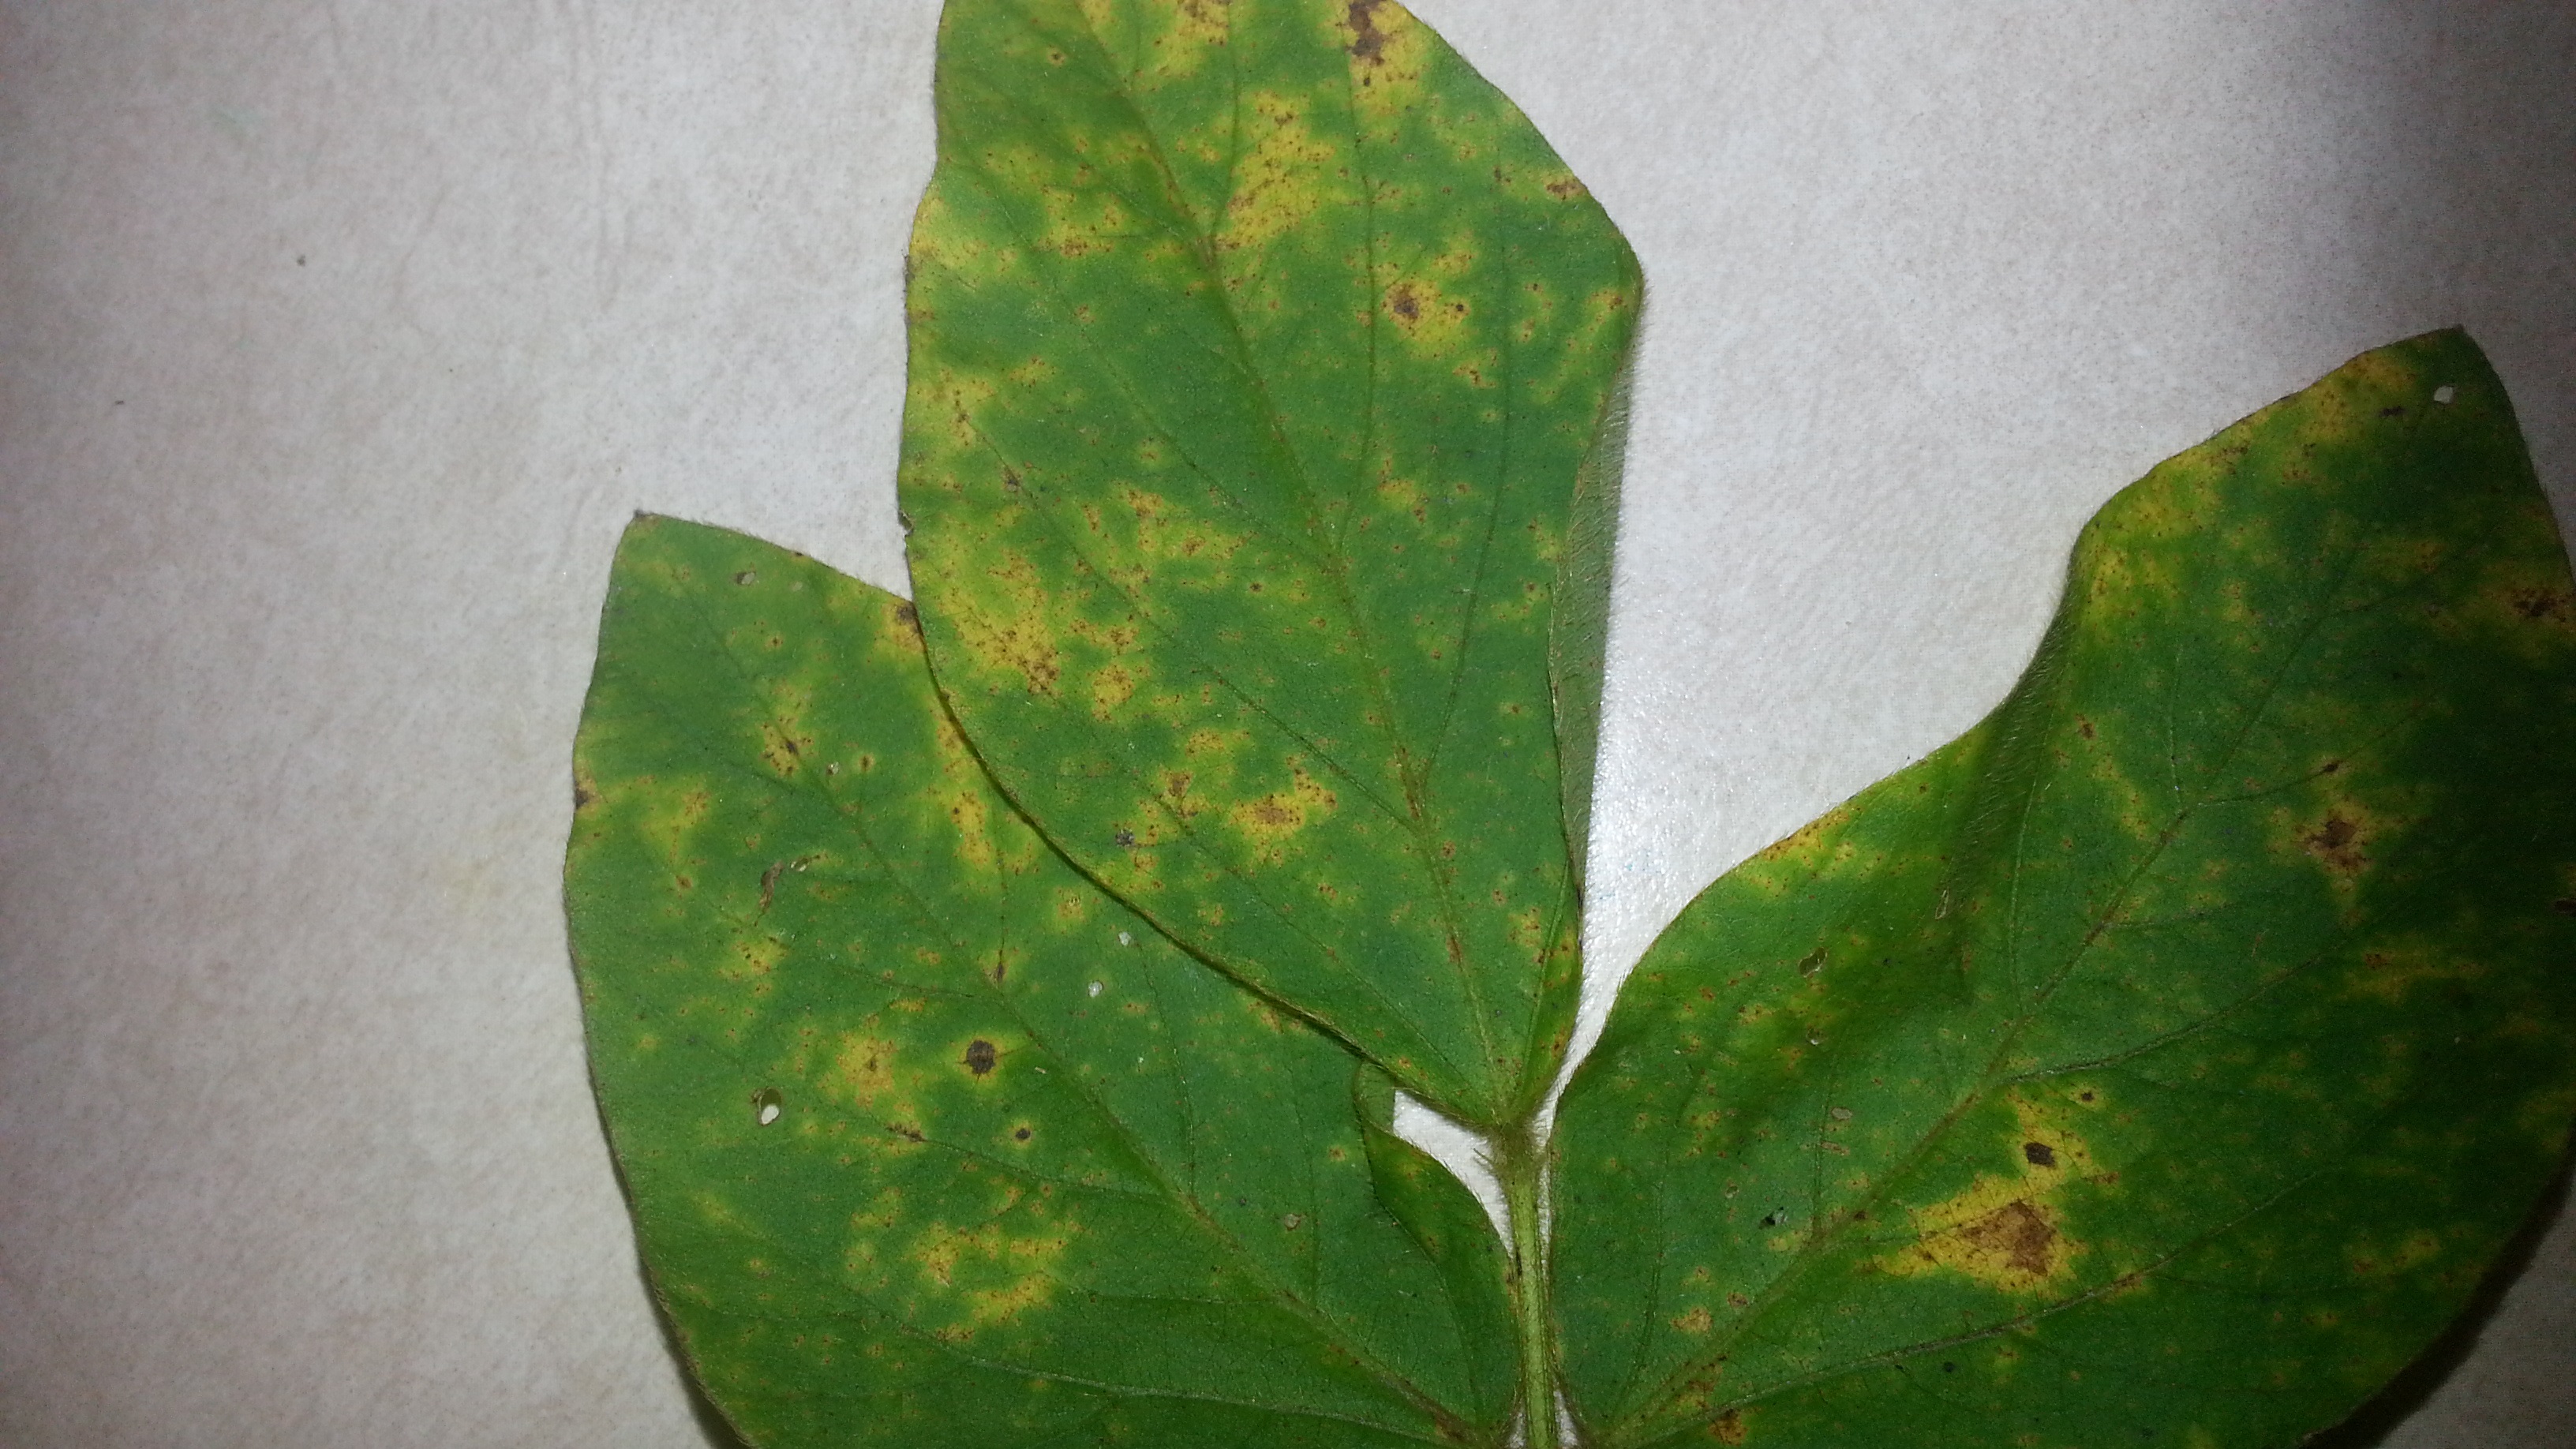 Soybean rust prior to sporulating